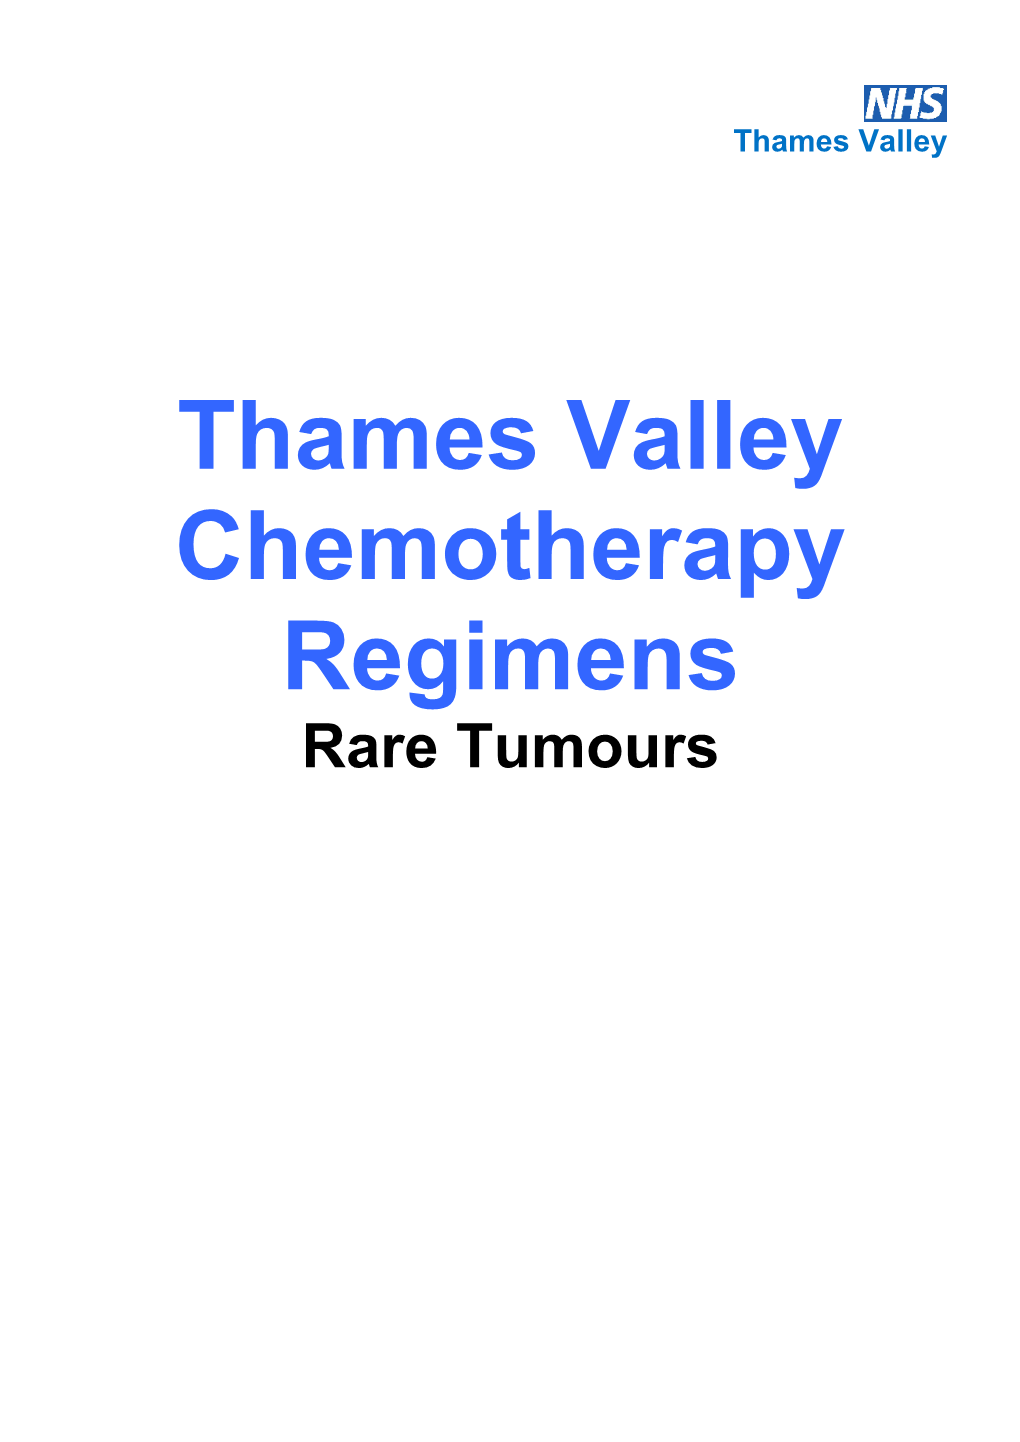 Network Chemotherapy Protocols